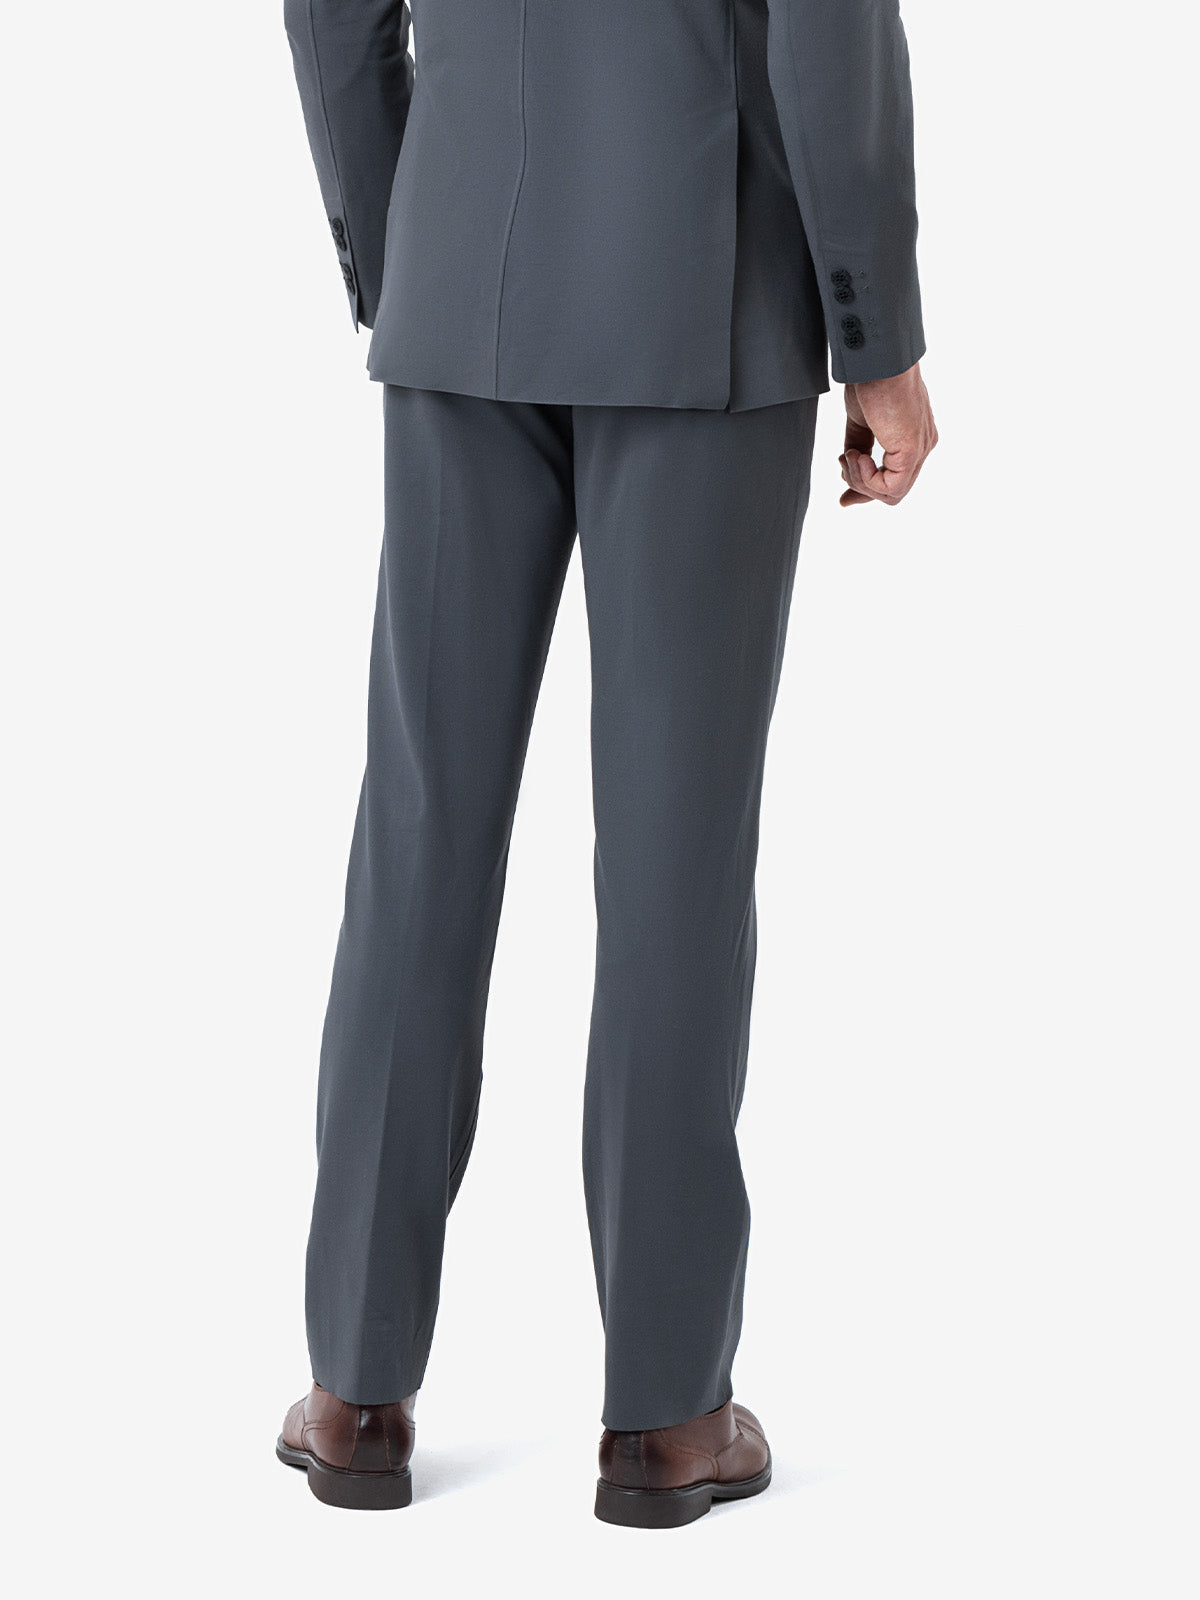 NEXT Suit: Trousers Charcoal Grey Men Trousers